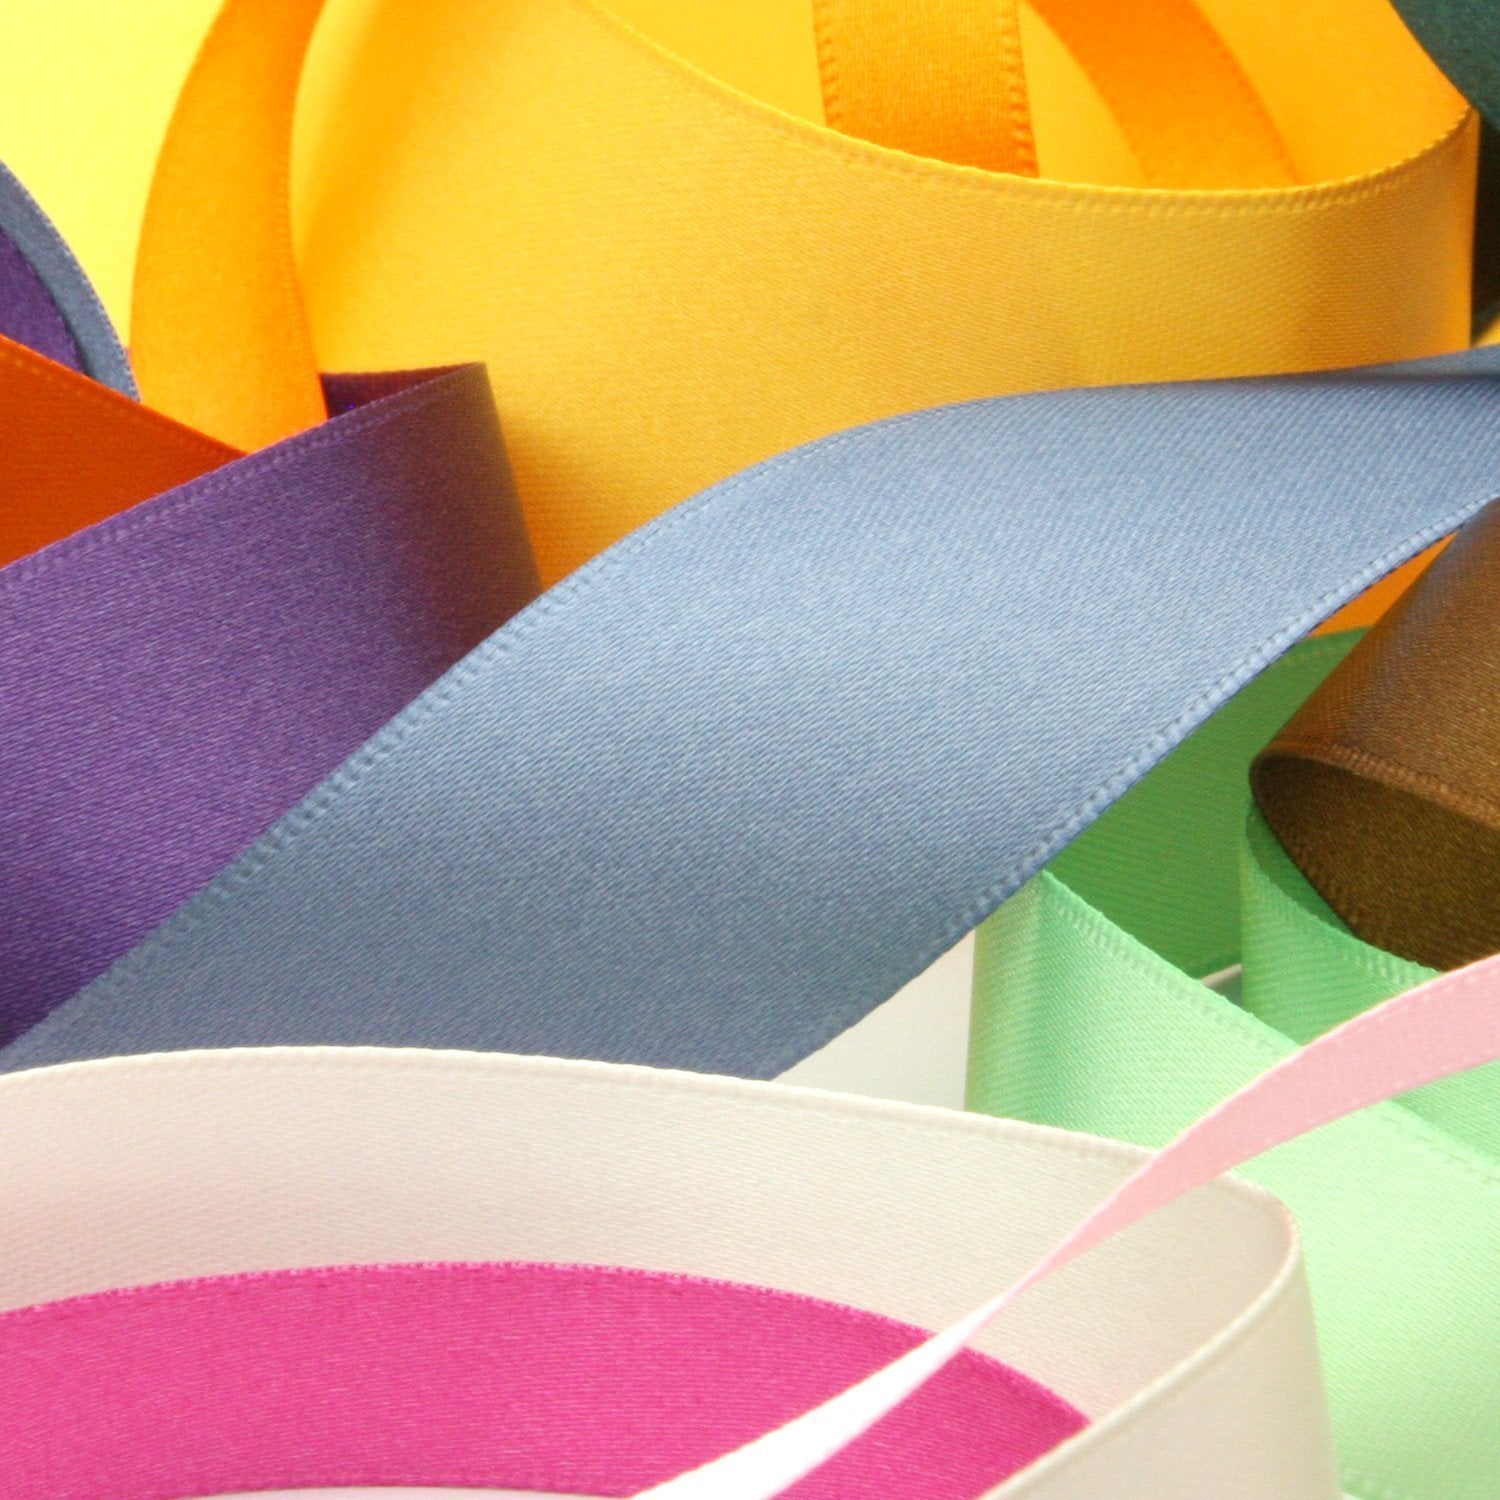 FUJIYAMA RIBBON [Wholesale] Polyester Double-Face Satin Ribbon 25mm 30 Meters Roll